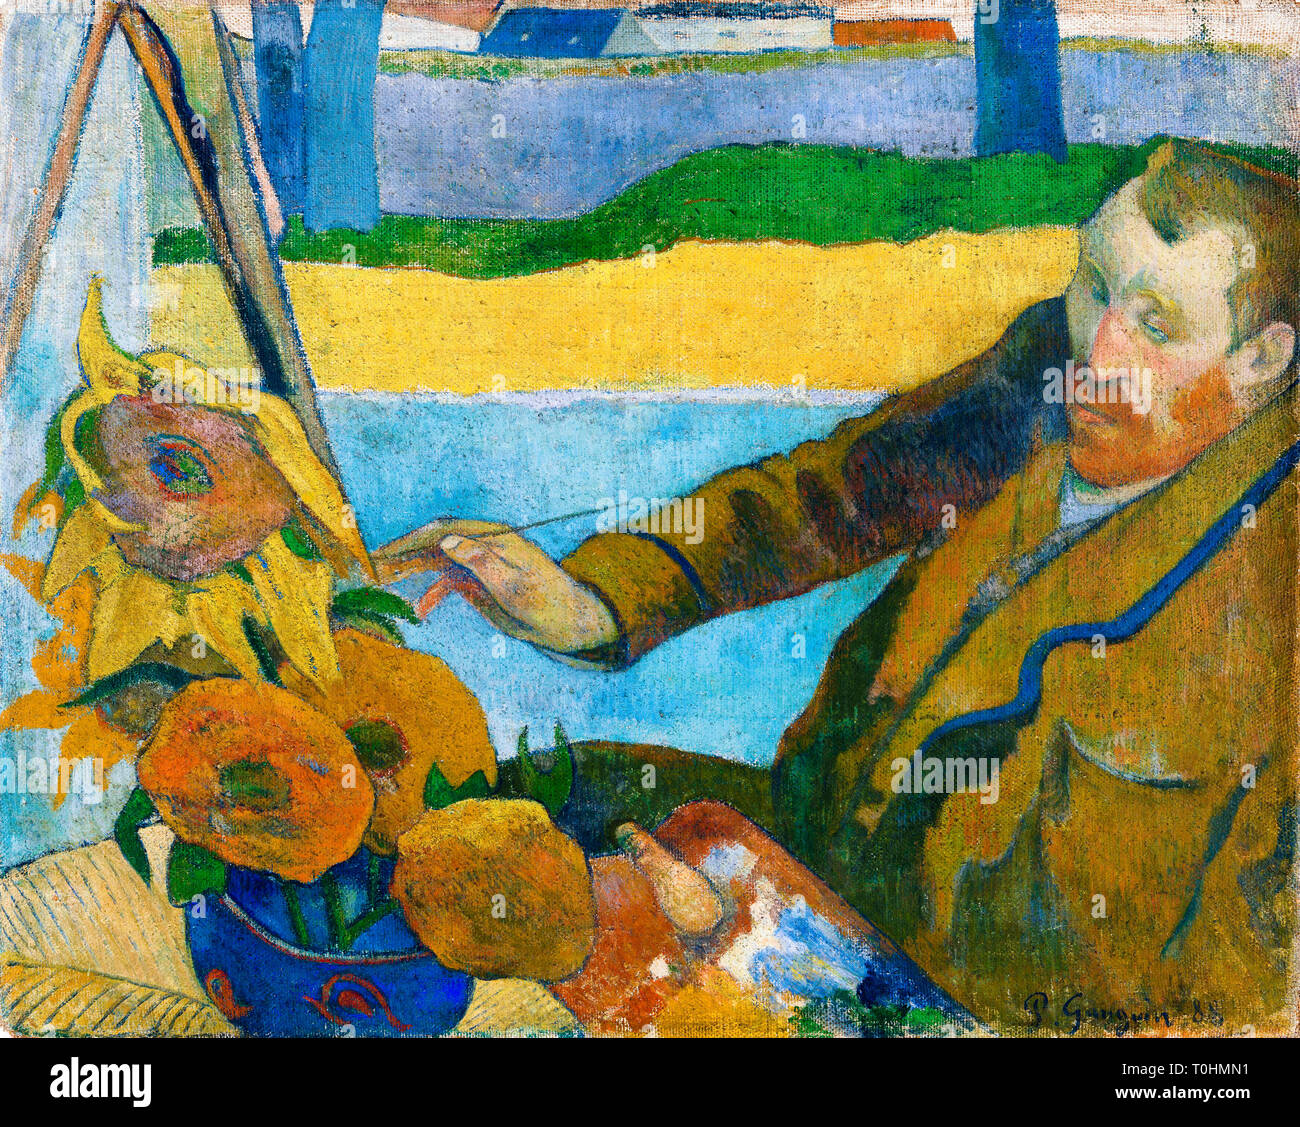 Paul Gauguin, Vincent Van Gogh dipinge i girasoli, pittura post-impressionista, Arles, Francia, 1888 Foto Stock